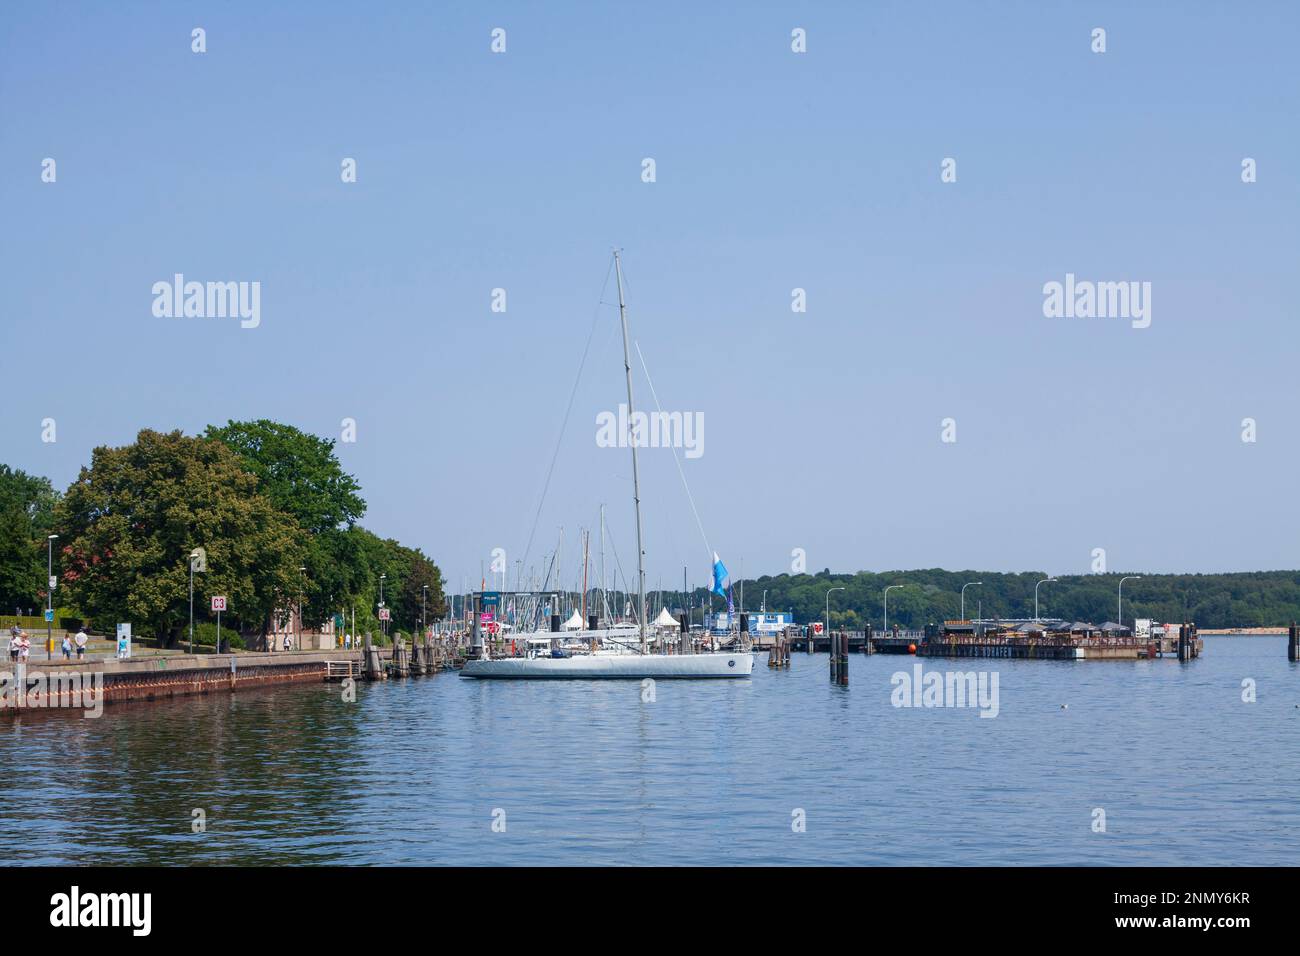 Marina con barche a vela, Kiel Fjord, Kiel, Schleswig-Holstein, Germania, Europa Foto Stock